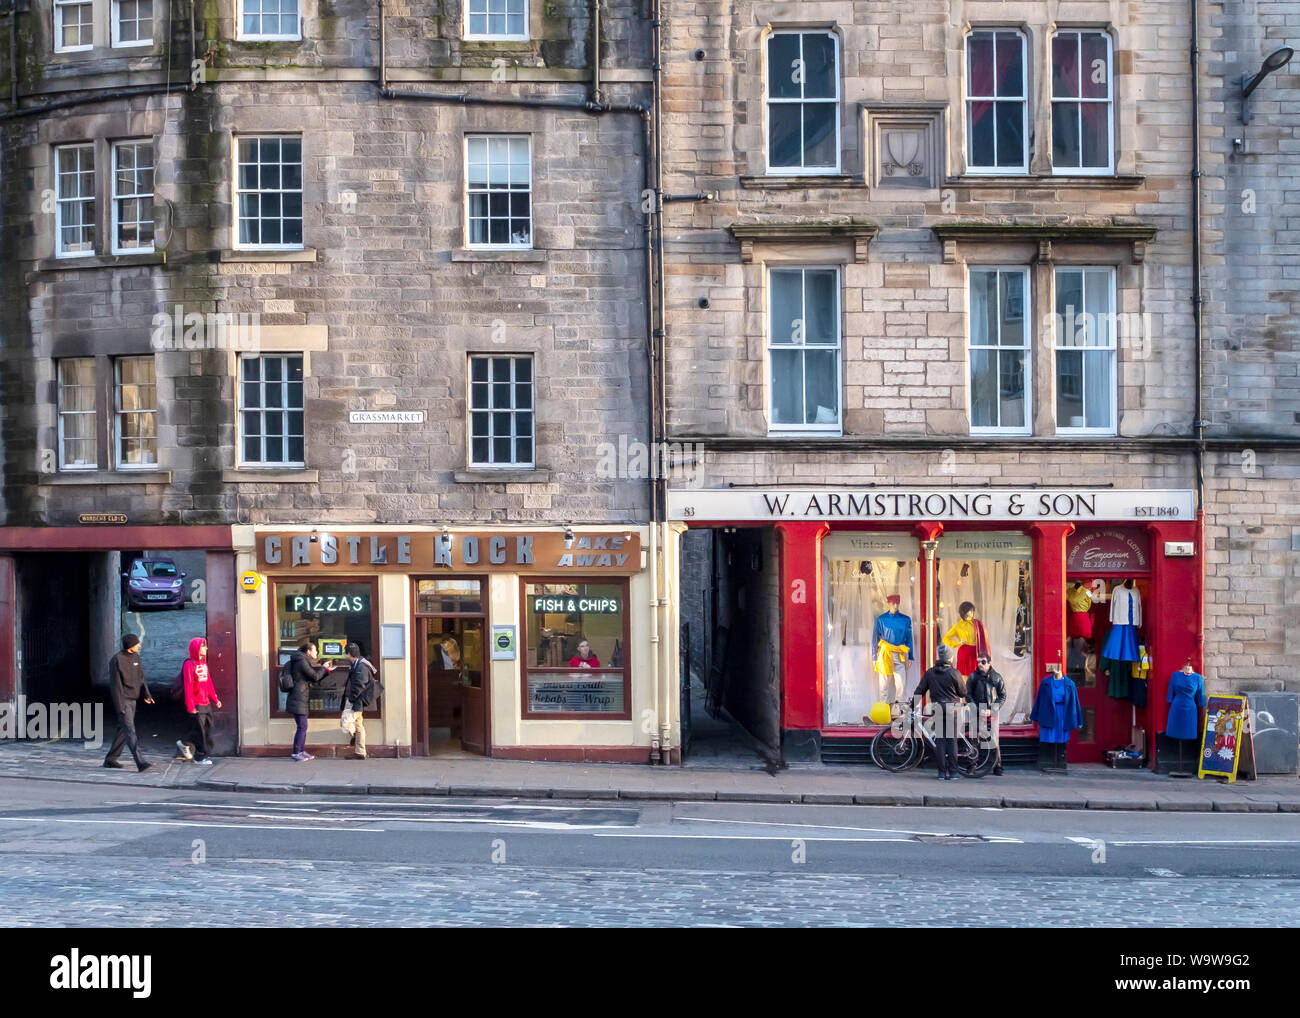 The Grassmarket, Edinburgh, Scotland, UK - including W. Armstrong & Son, a second-hand clothes shop. Stock Photo